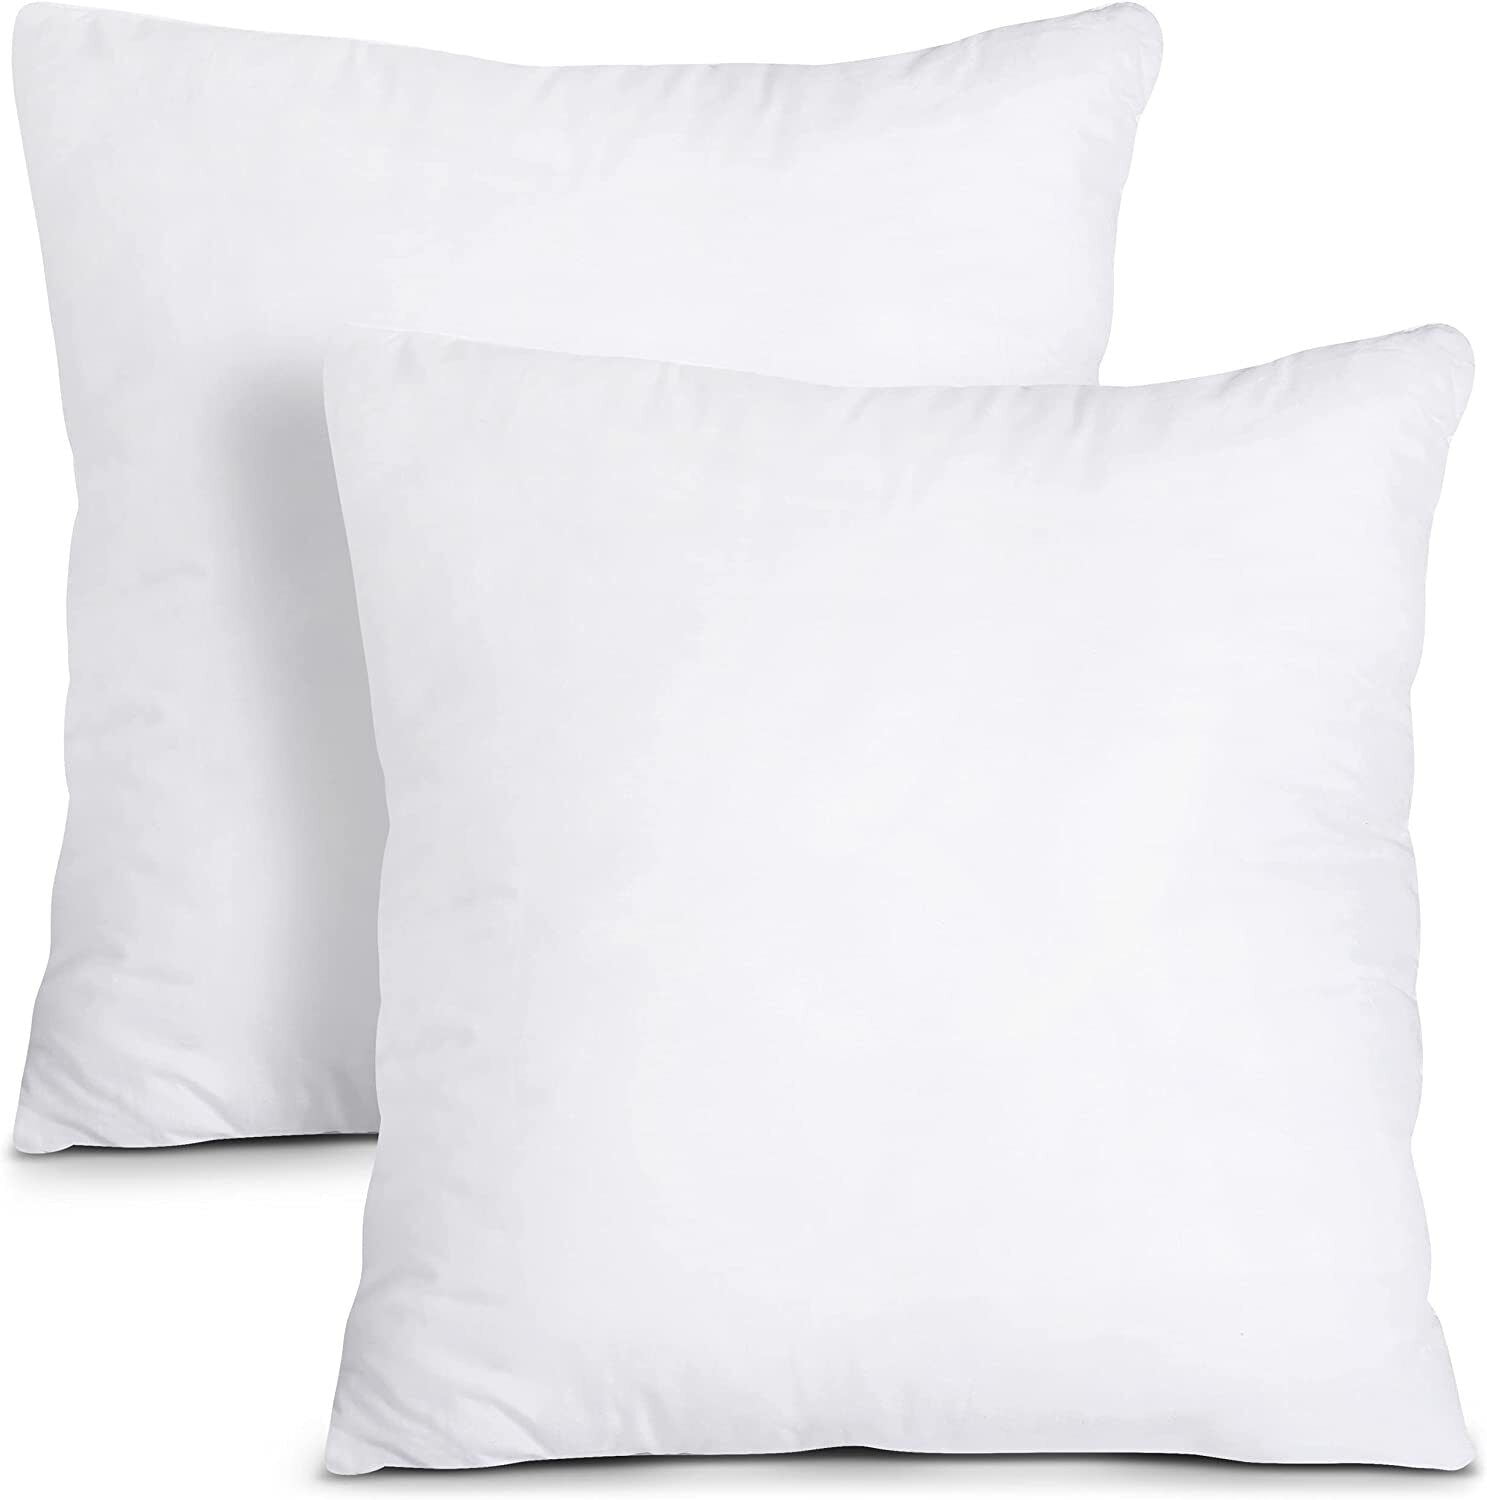 Throw Pillow Inserts, 18” x 18”, 4 Pack - AliExpress